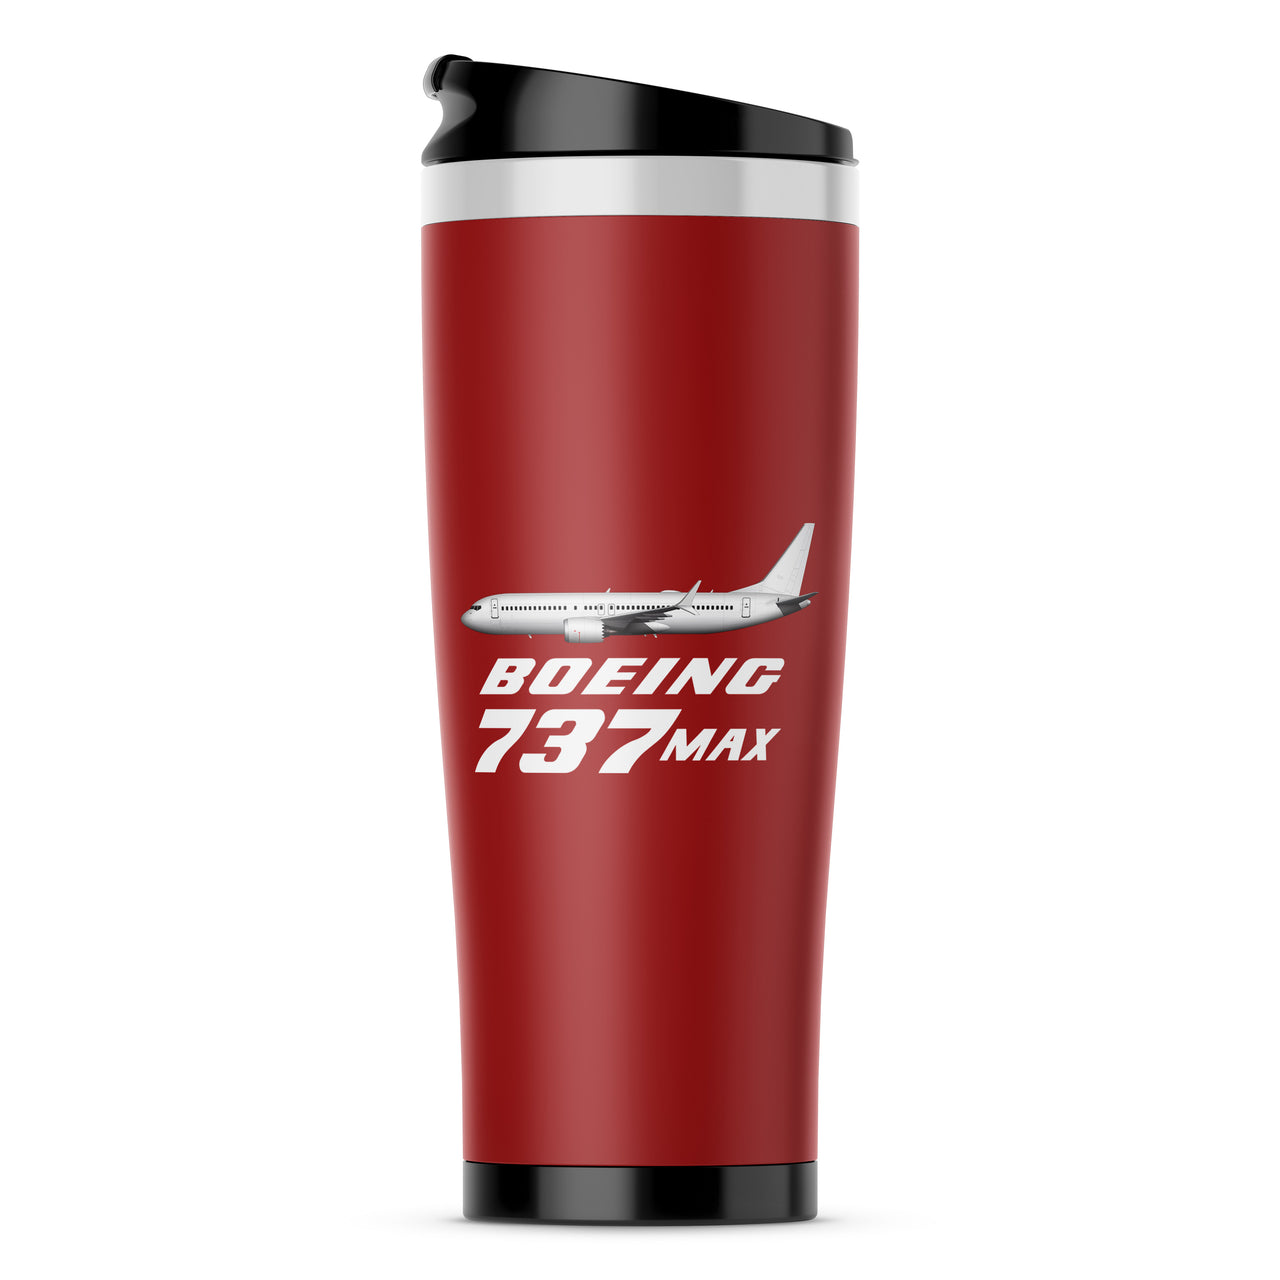 The Boeing 737Max Designed Travel Mugs